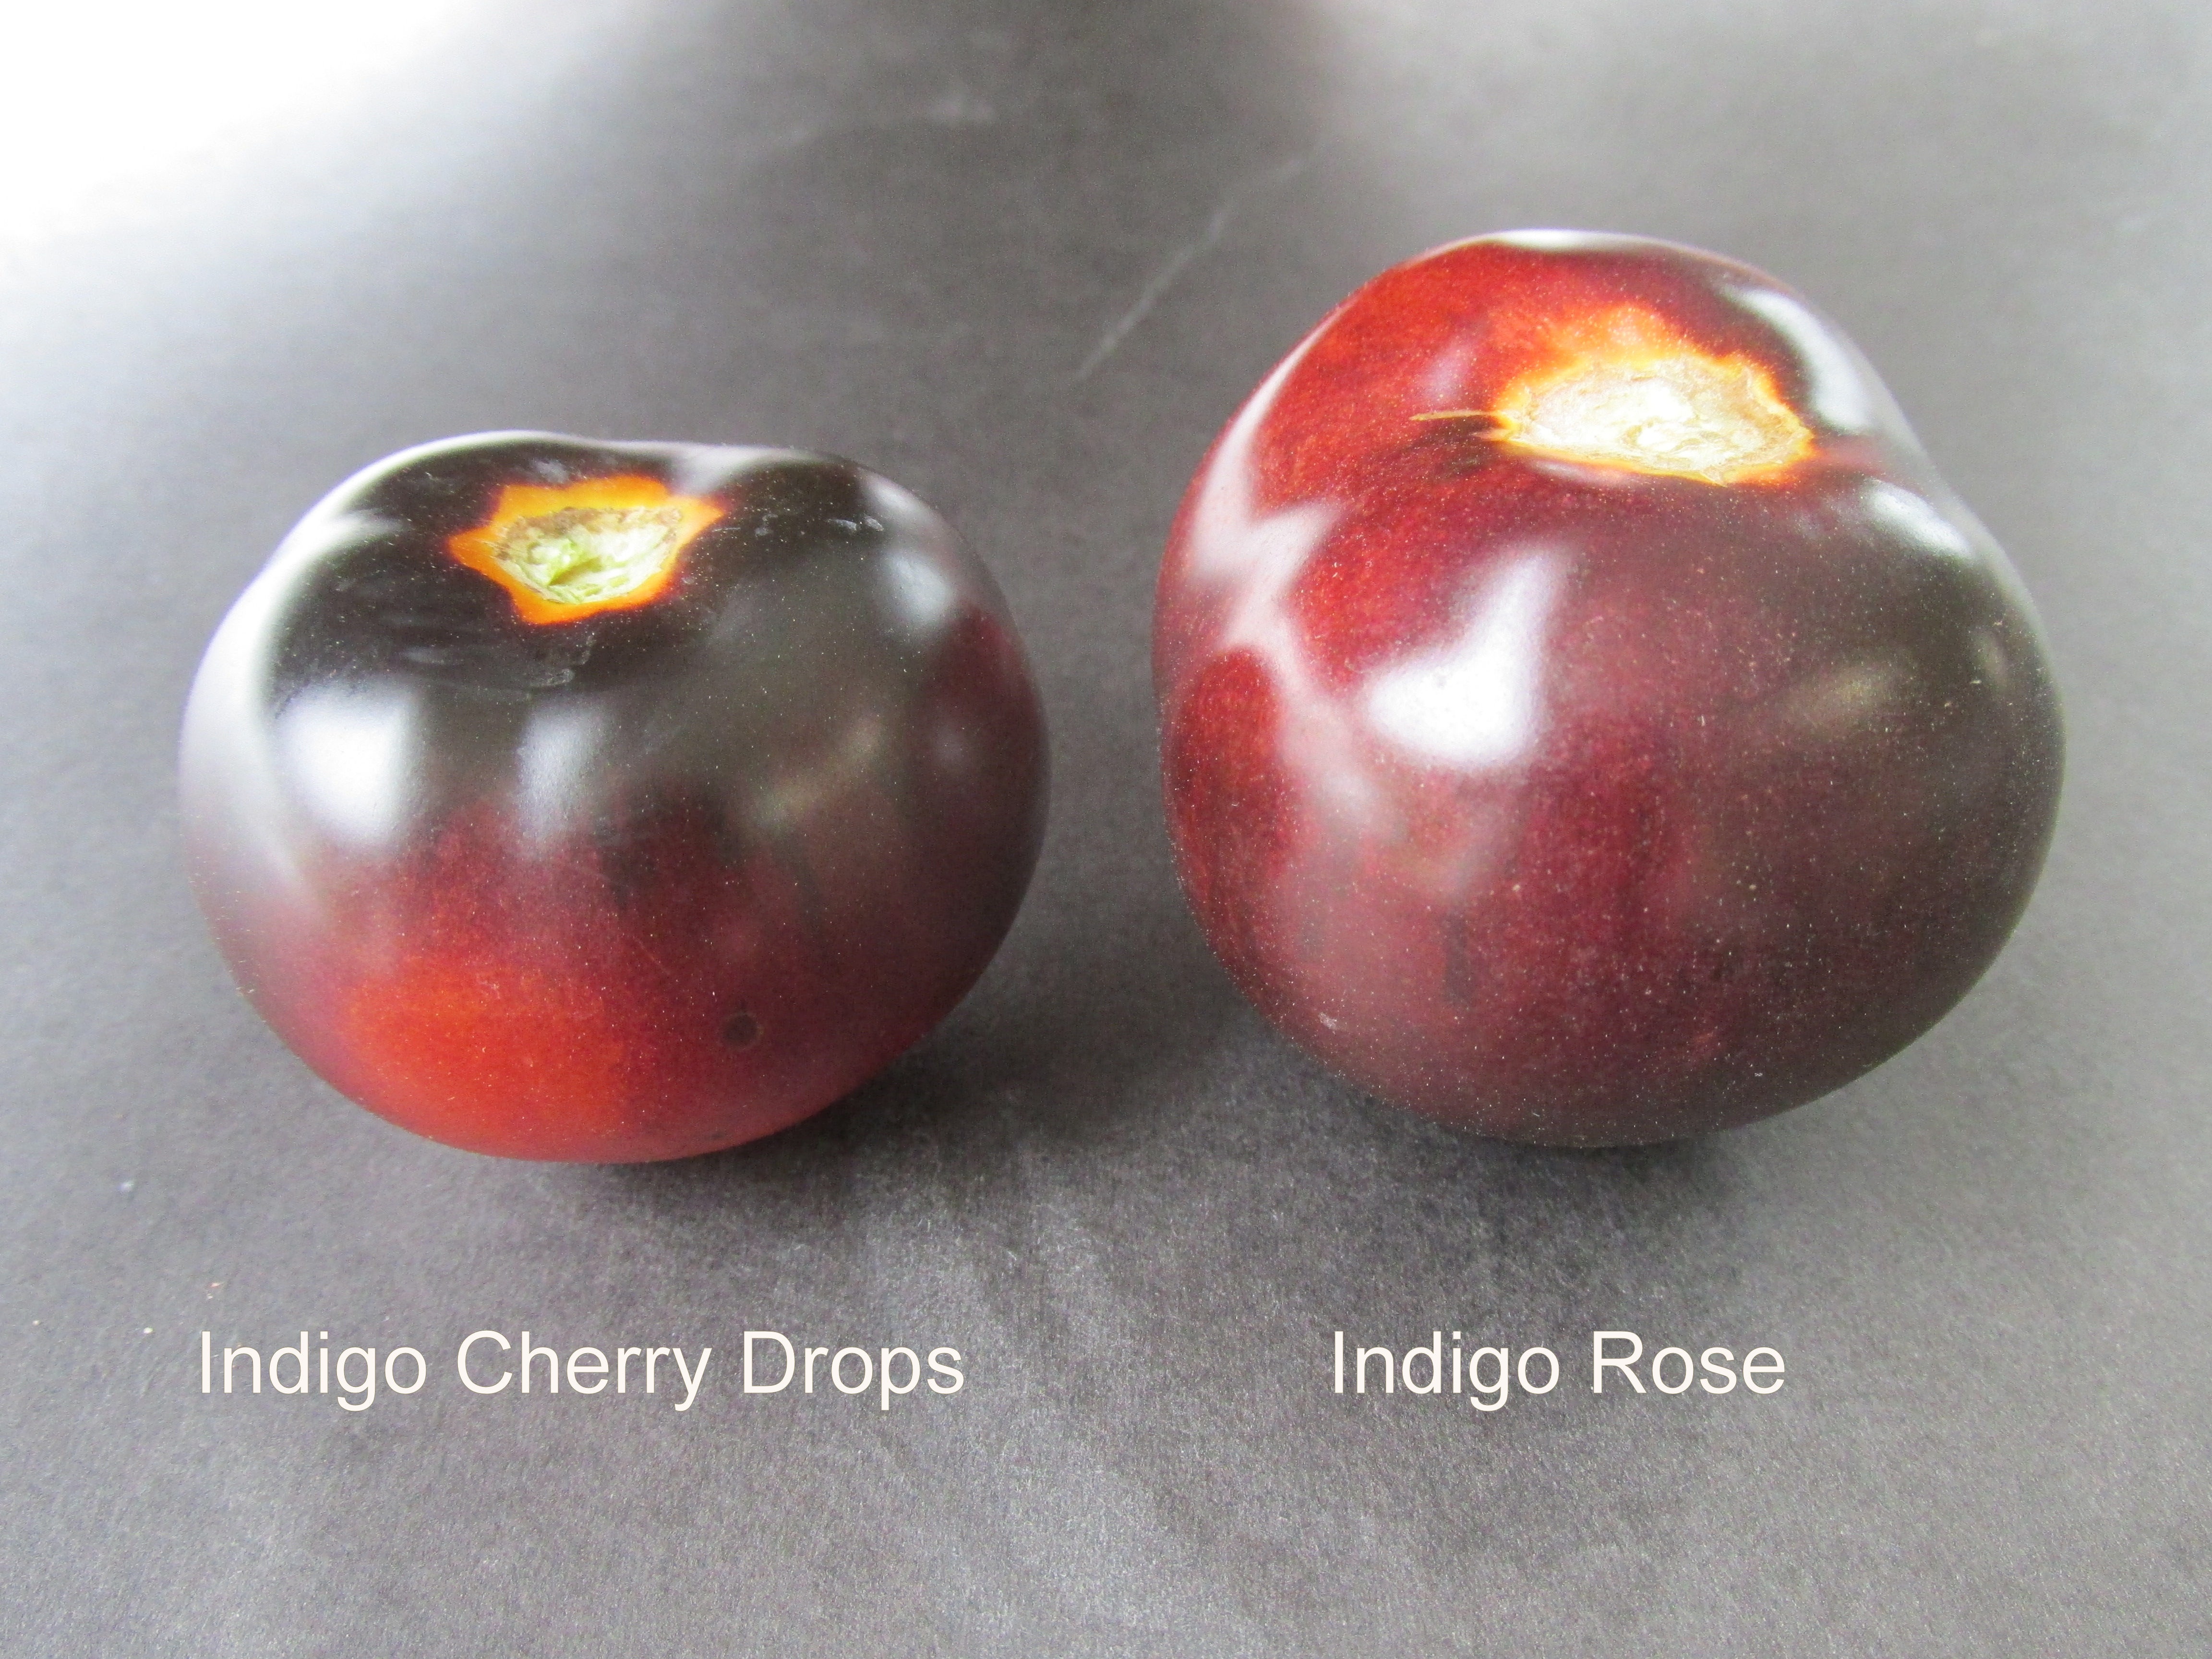 Indigo Cherry Drops